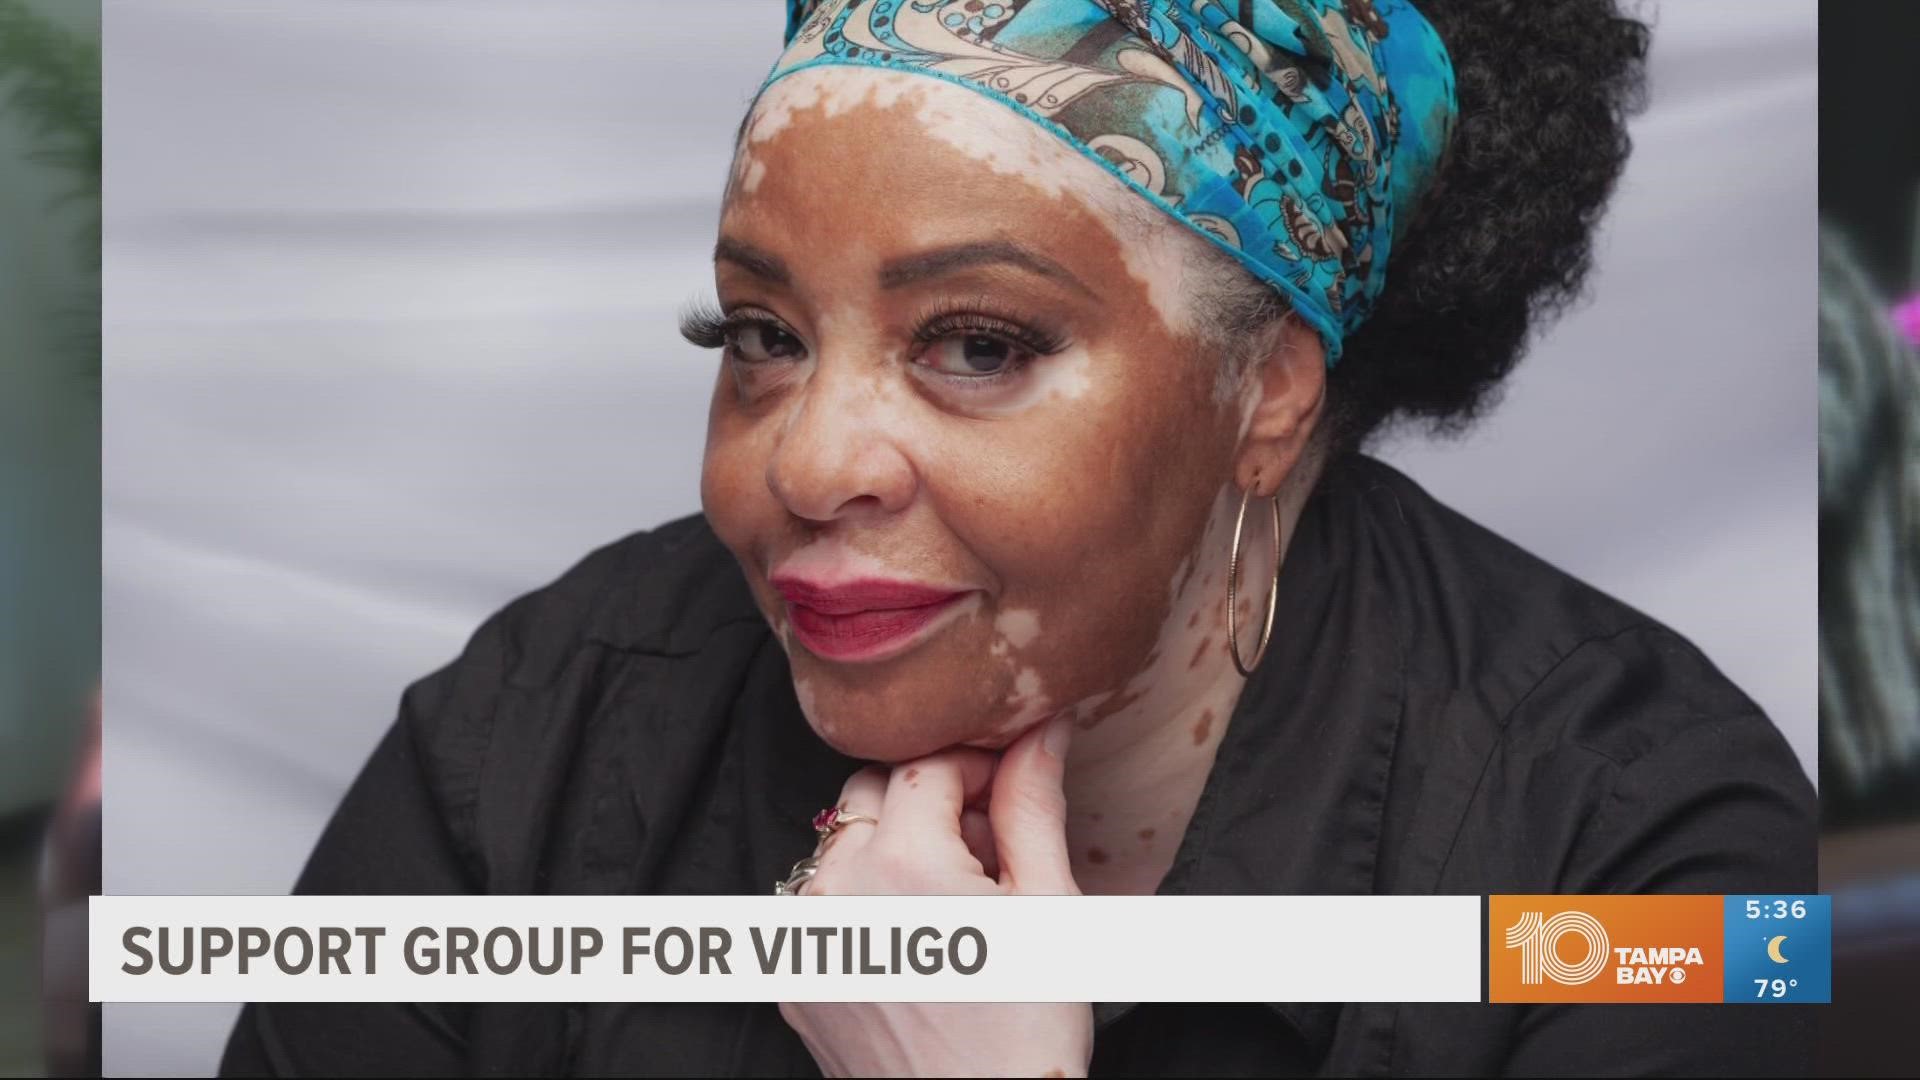 The group aims to educate and reduce the stigma around vitiligo.